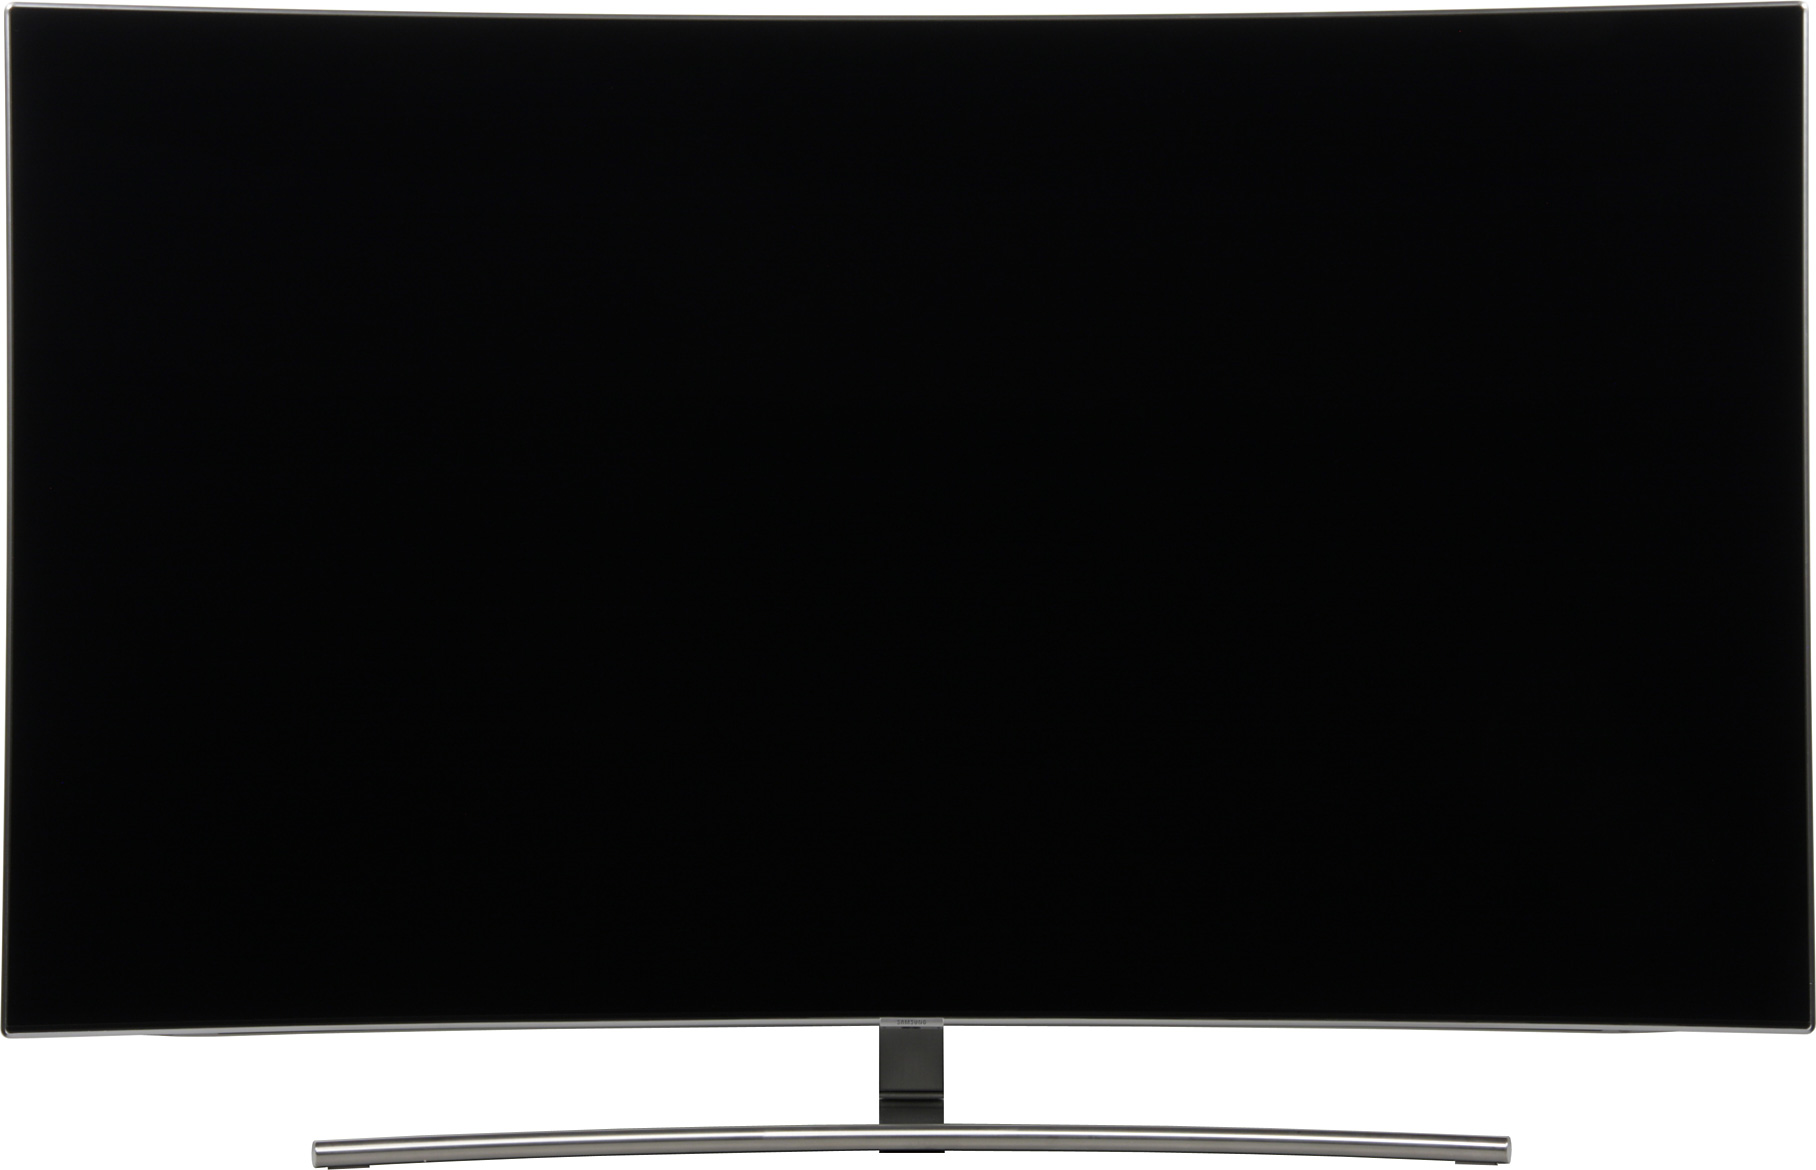 Телевизор samsung функция. Ue65js9500t. Подставка Samsung ue65js9000. Samsung SUHD TV 65 Series 9 9000.